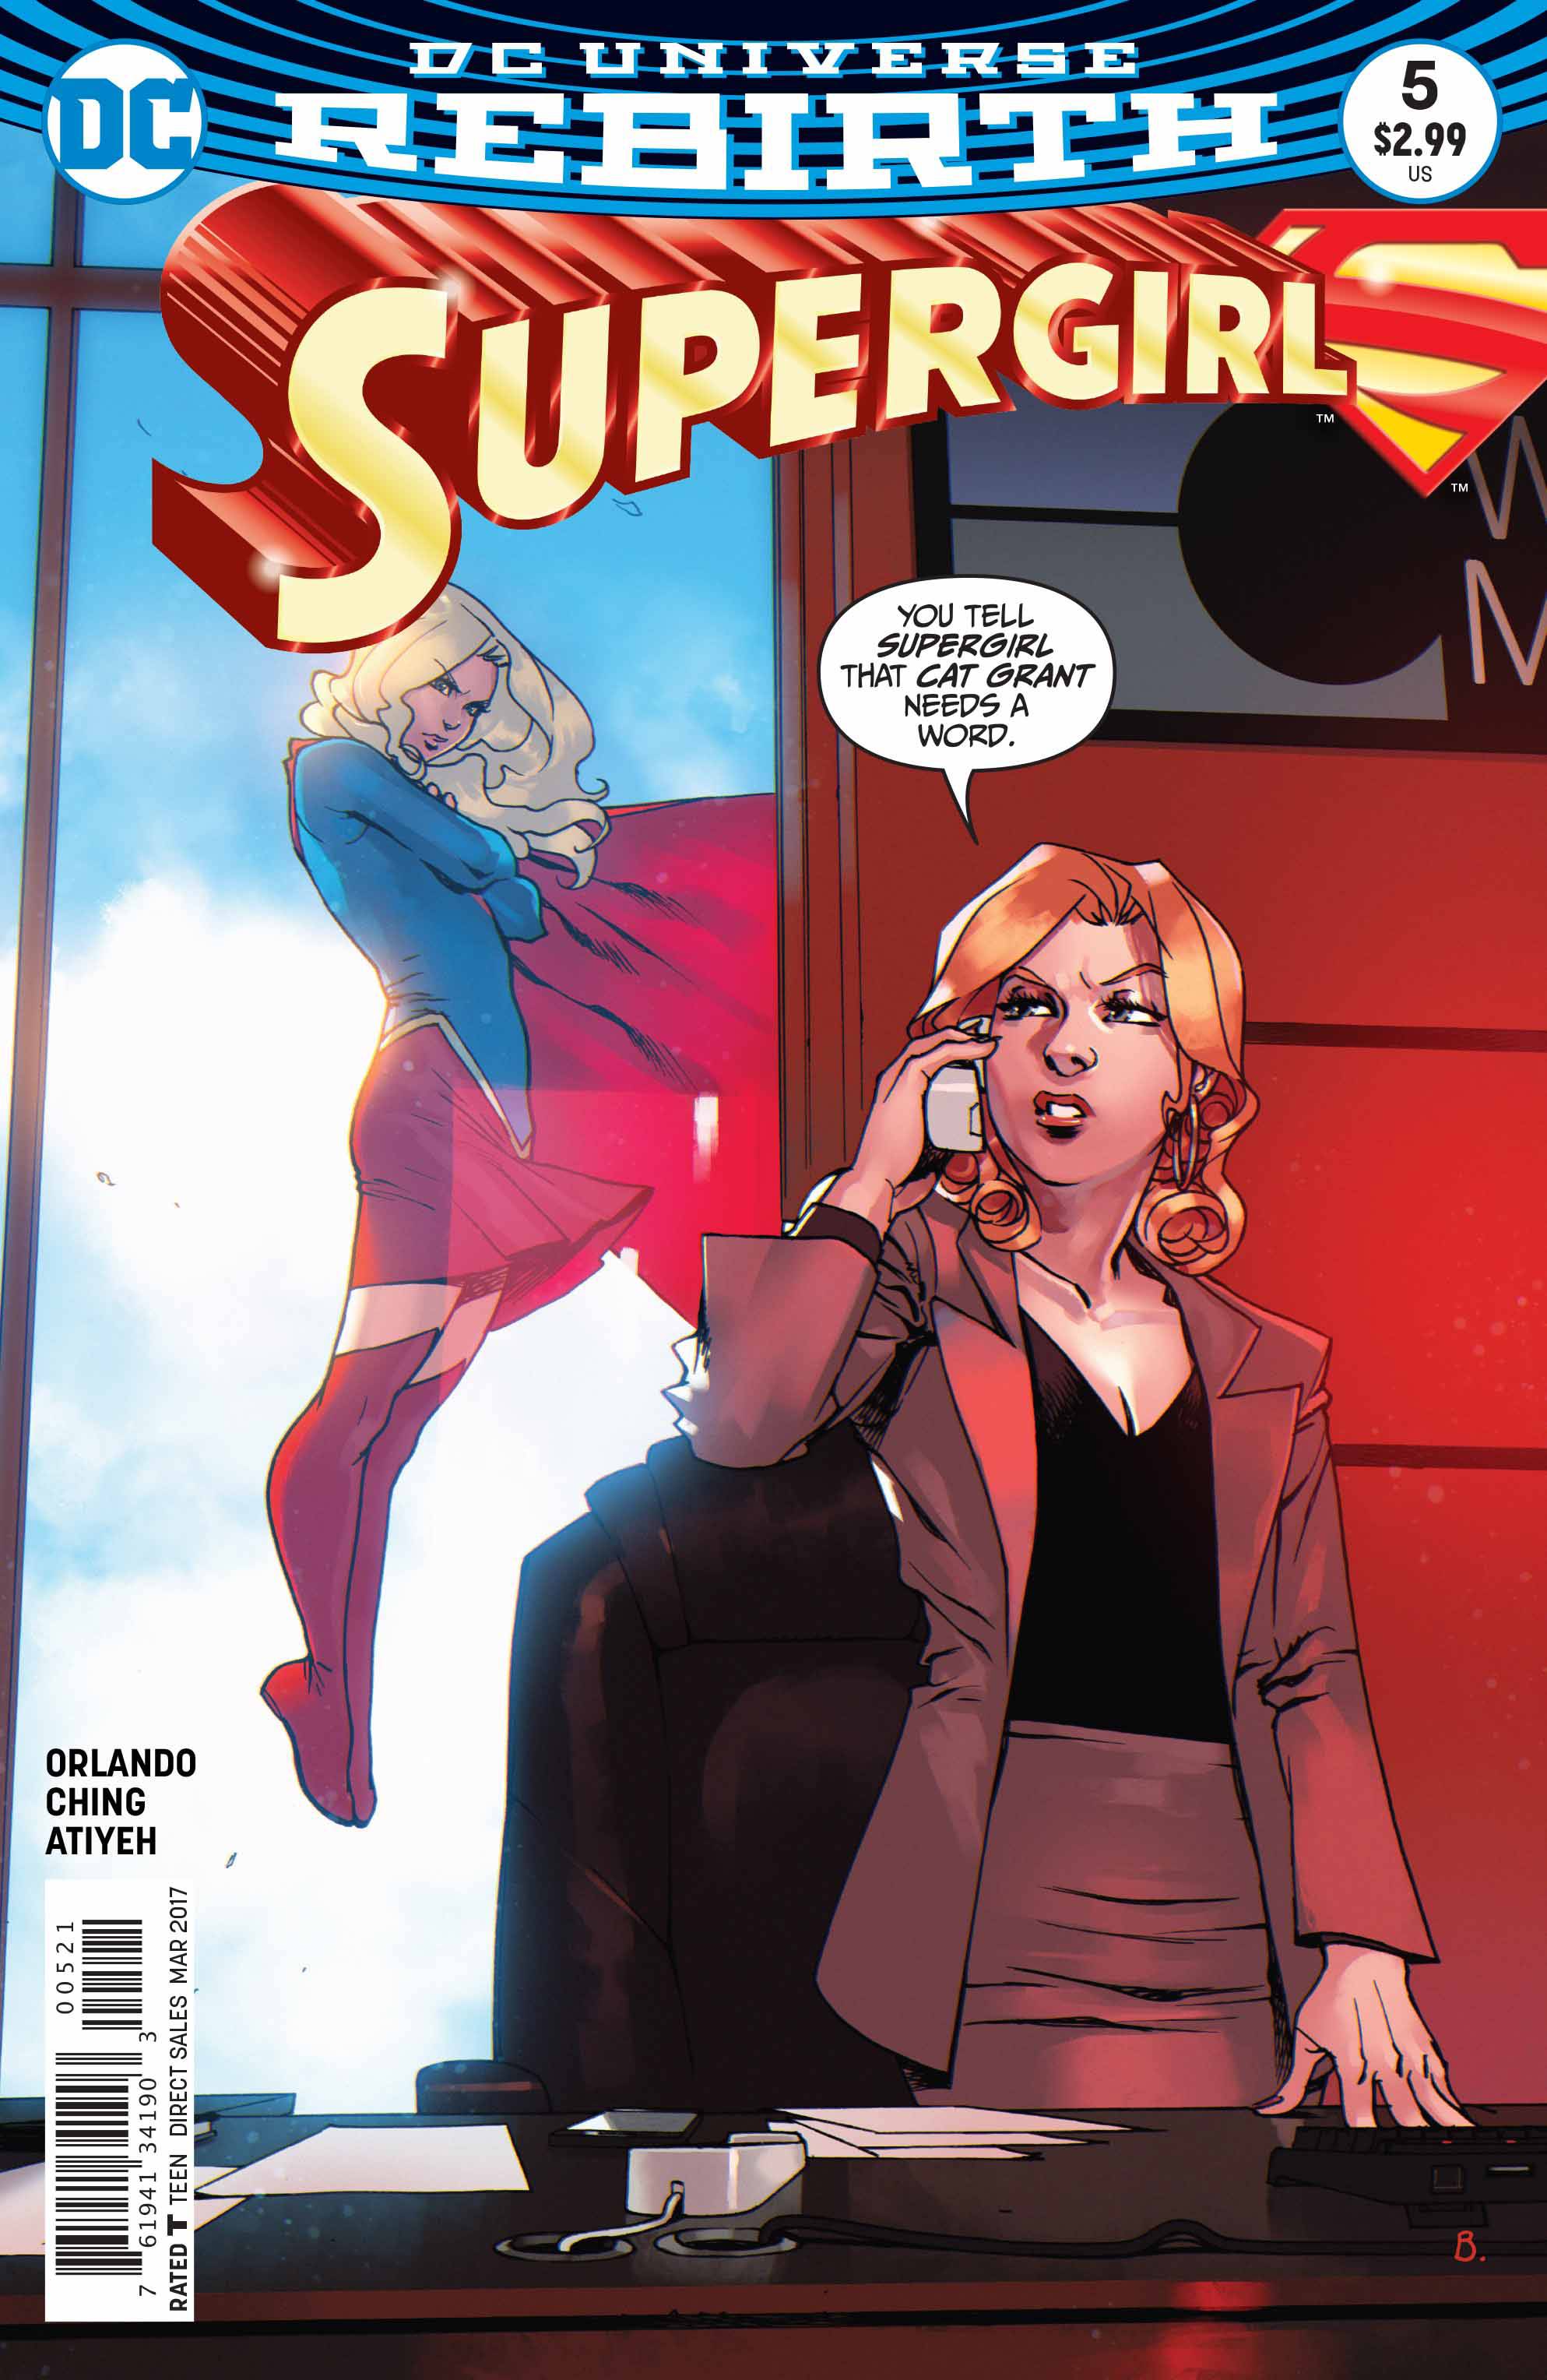 Supergirl (6th Series) 5 Var A Comic Book NM